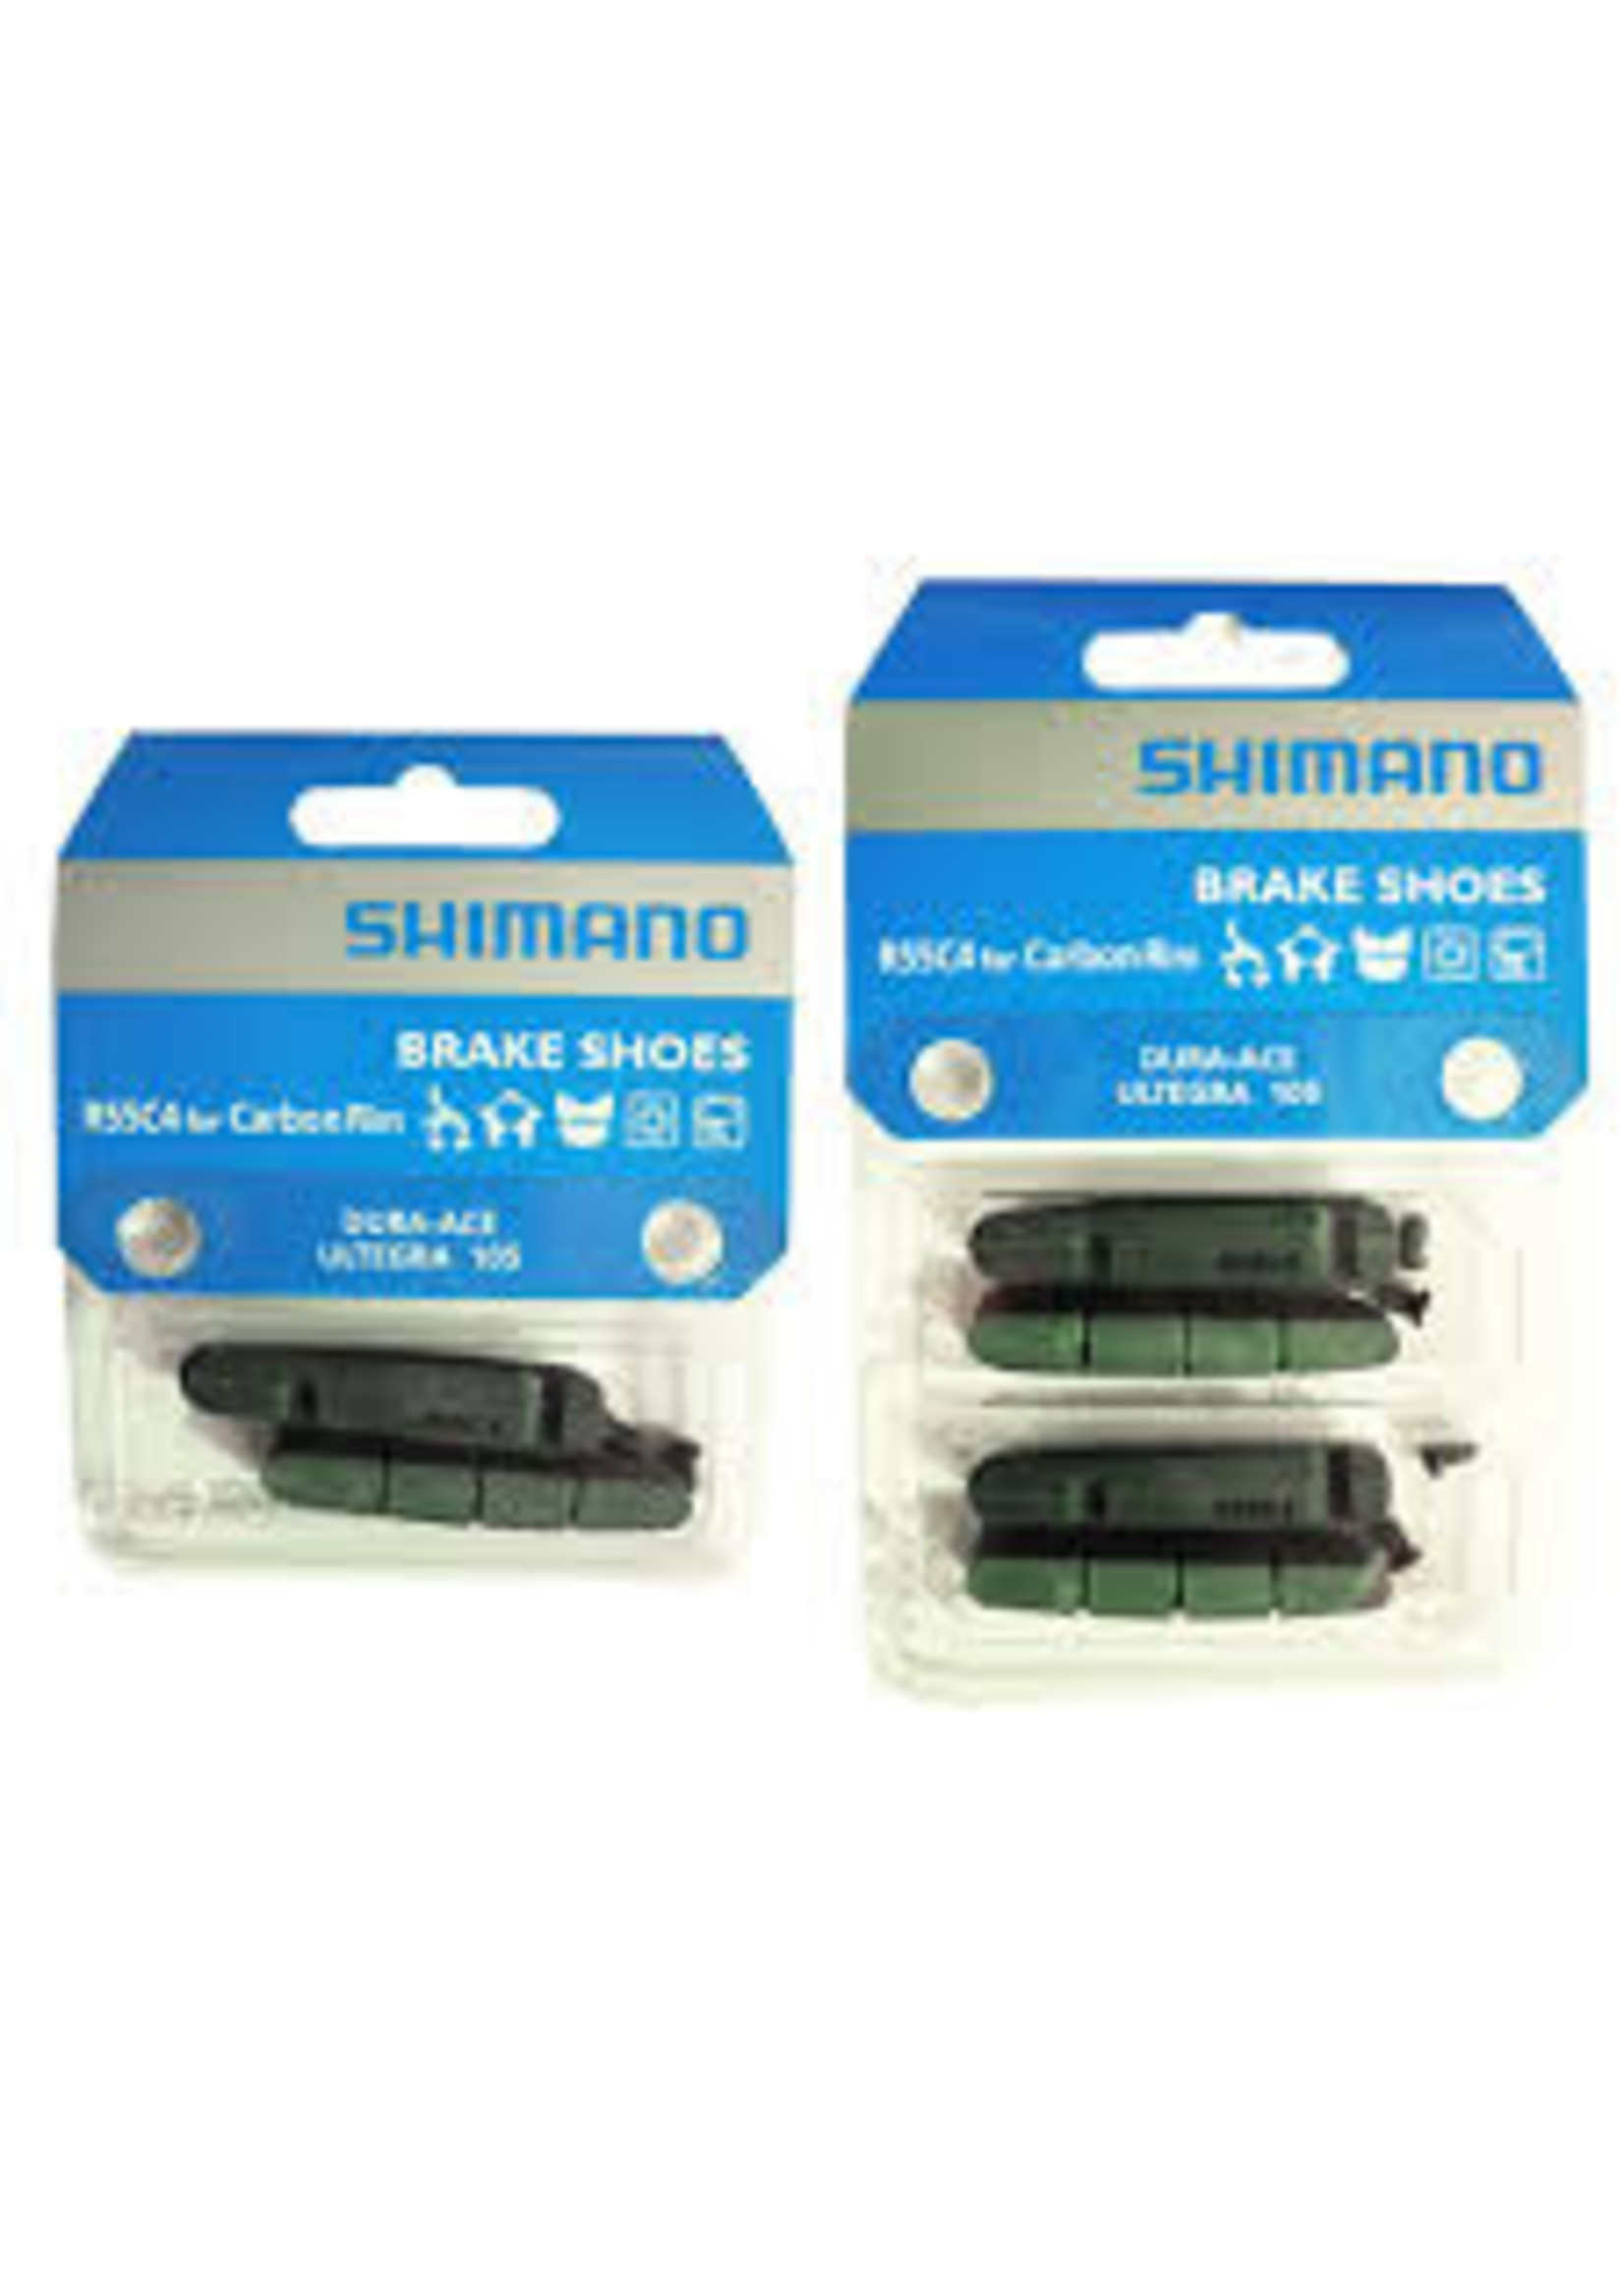 Shimano Shimano Brake shoes inserts R55C4